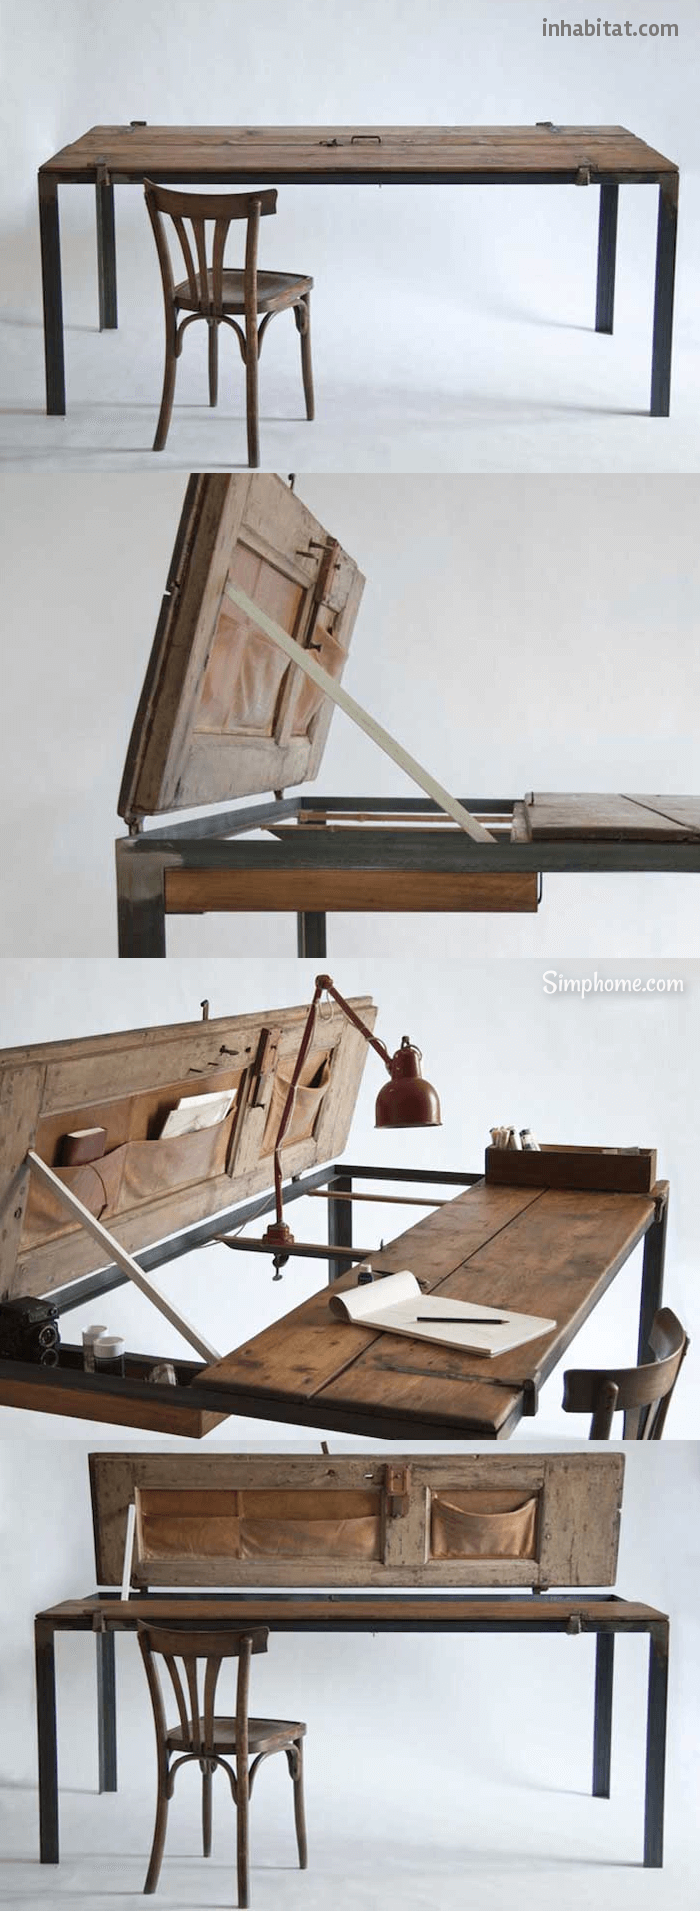 Manoteca Reincarnates a Vintage Door as a Rustic Desk 18 Simphome com p